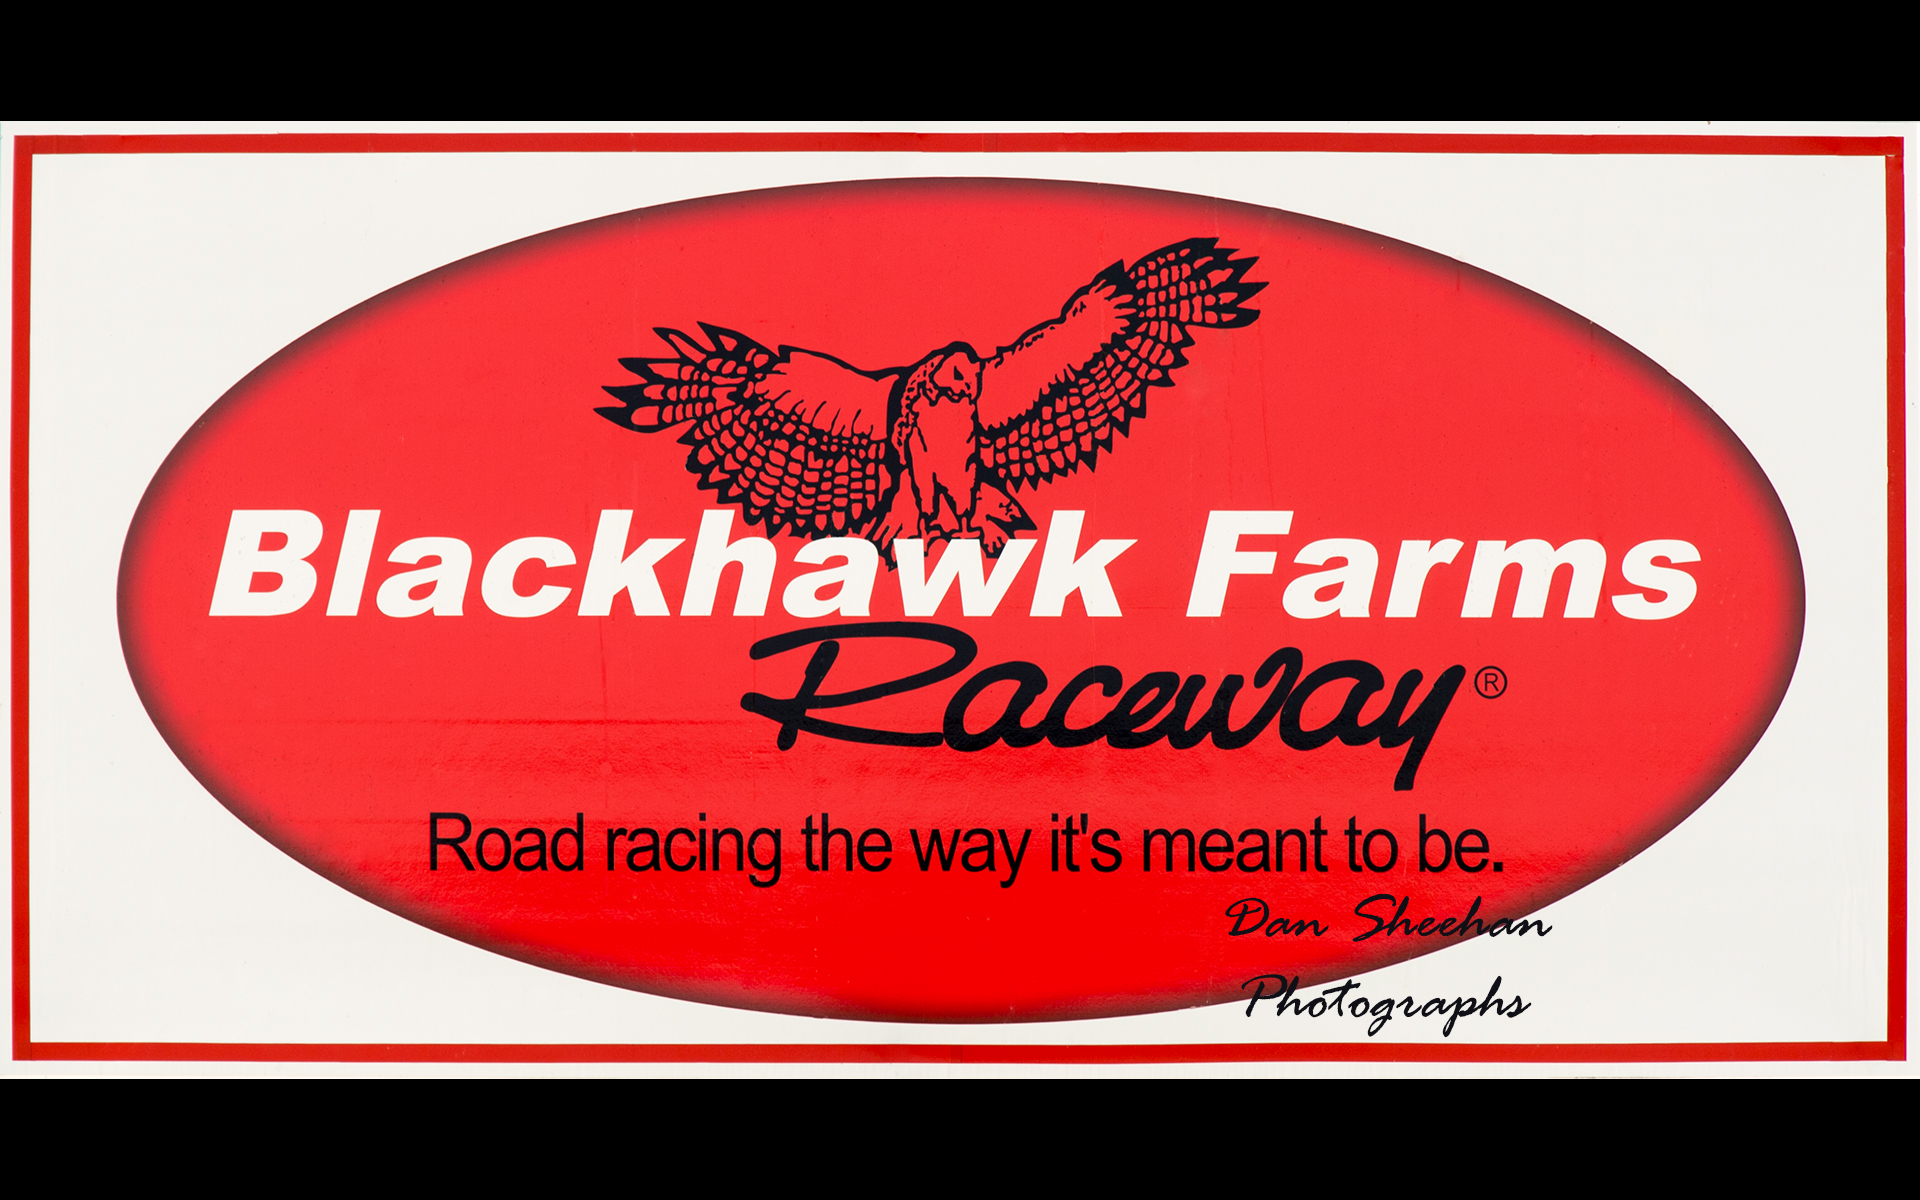 BlackHawk Farms Raceway : Cars : Dan Sheehan Photographs - Fine Art Stock Photography